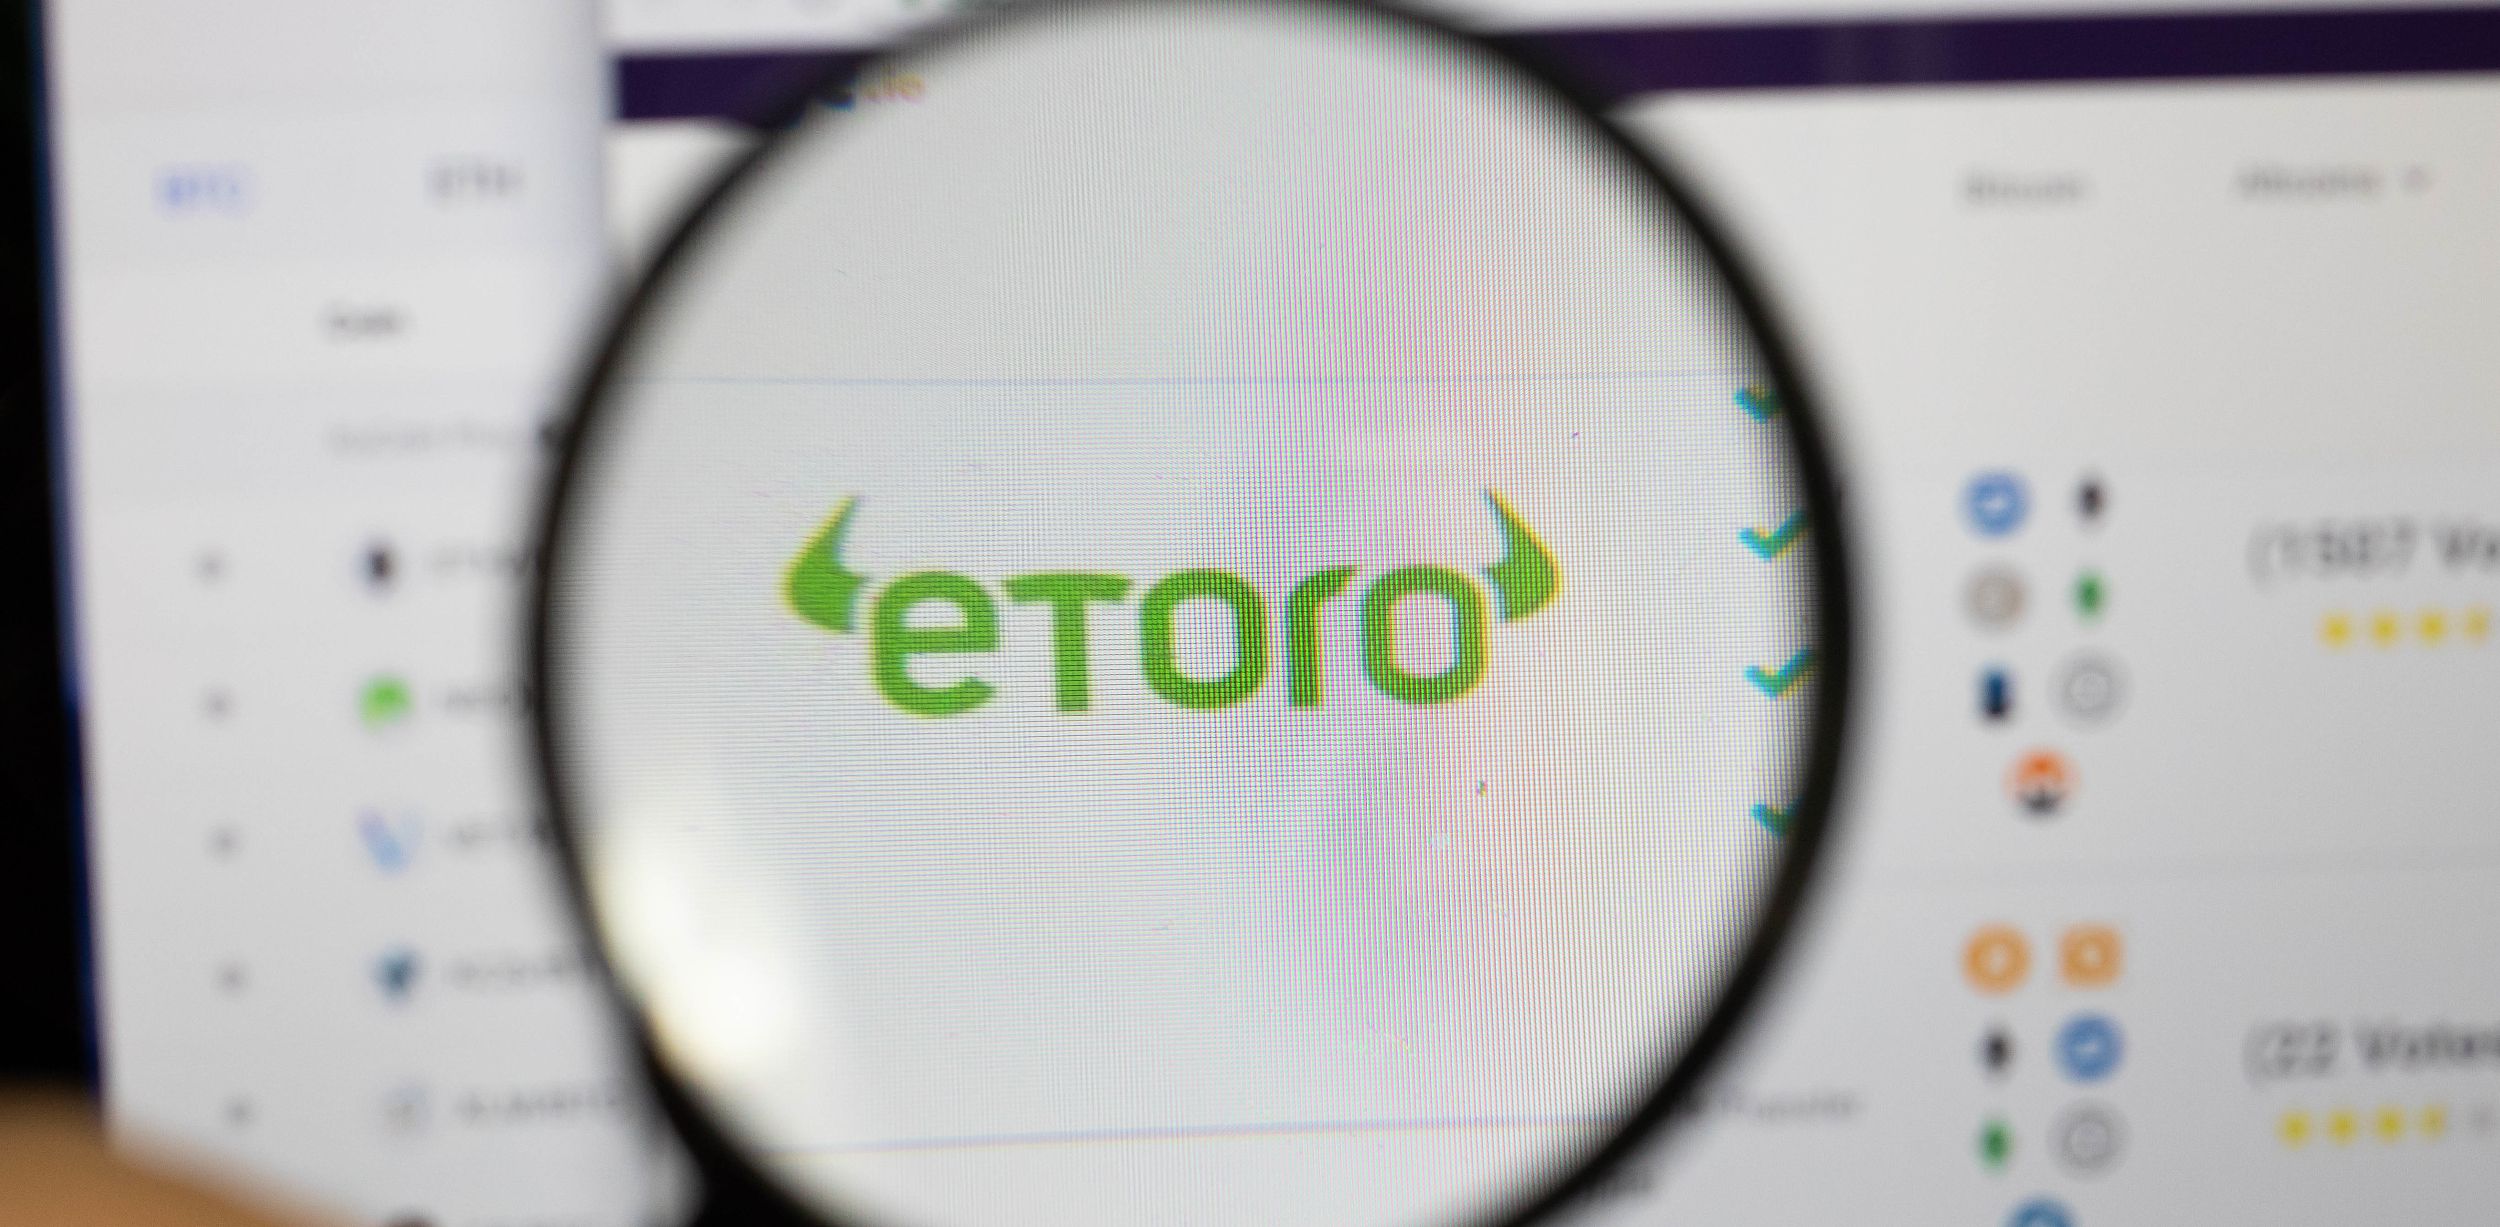 etoro stock exchange logo on computer screen